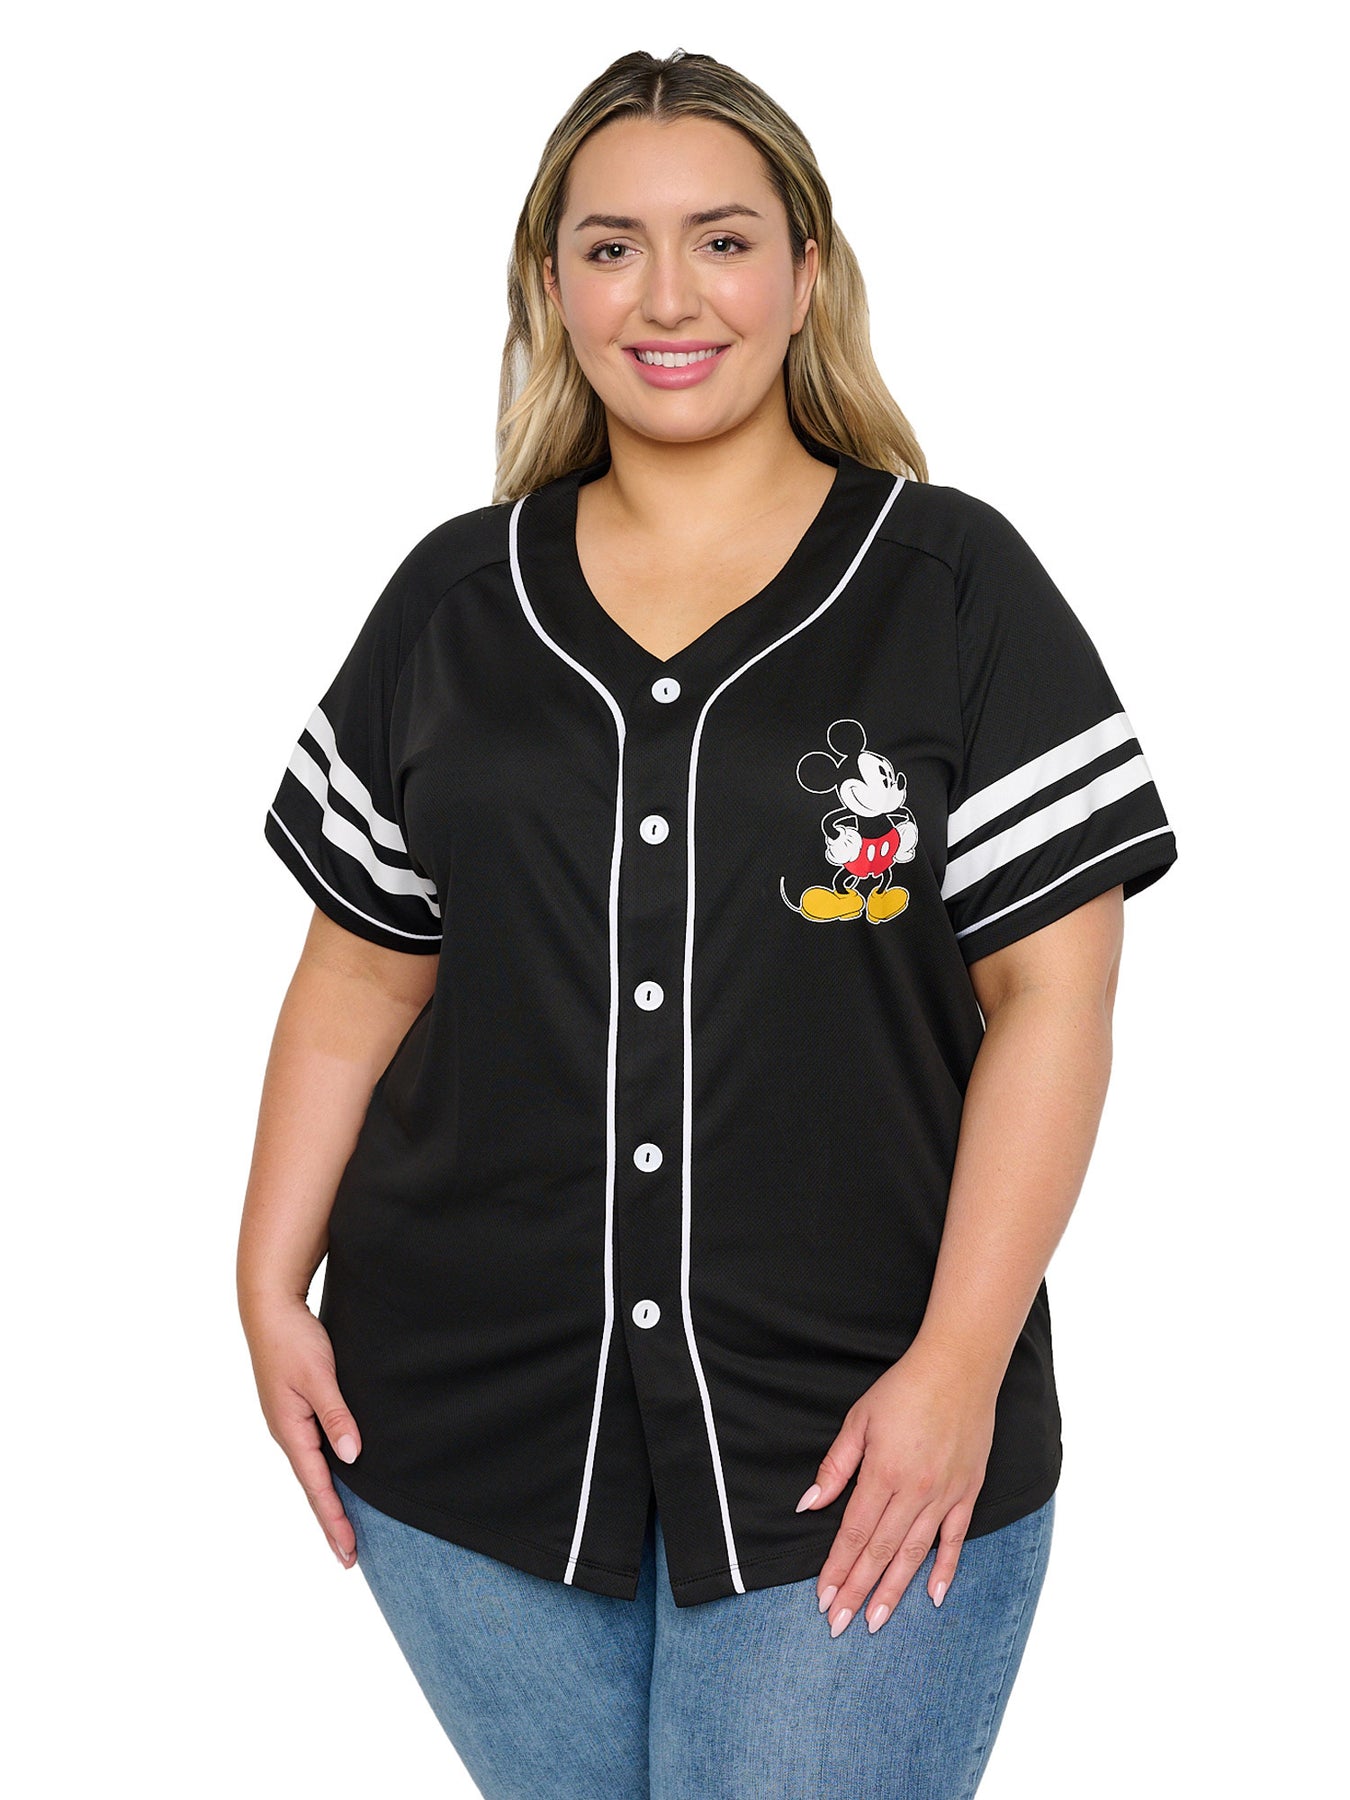 Disney Mickey Mouse Black Baseball Jersey Shirt Button Down